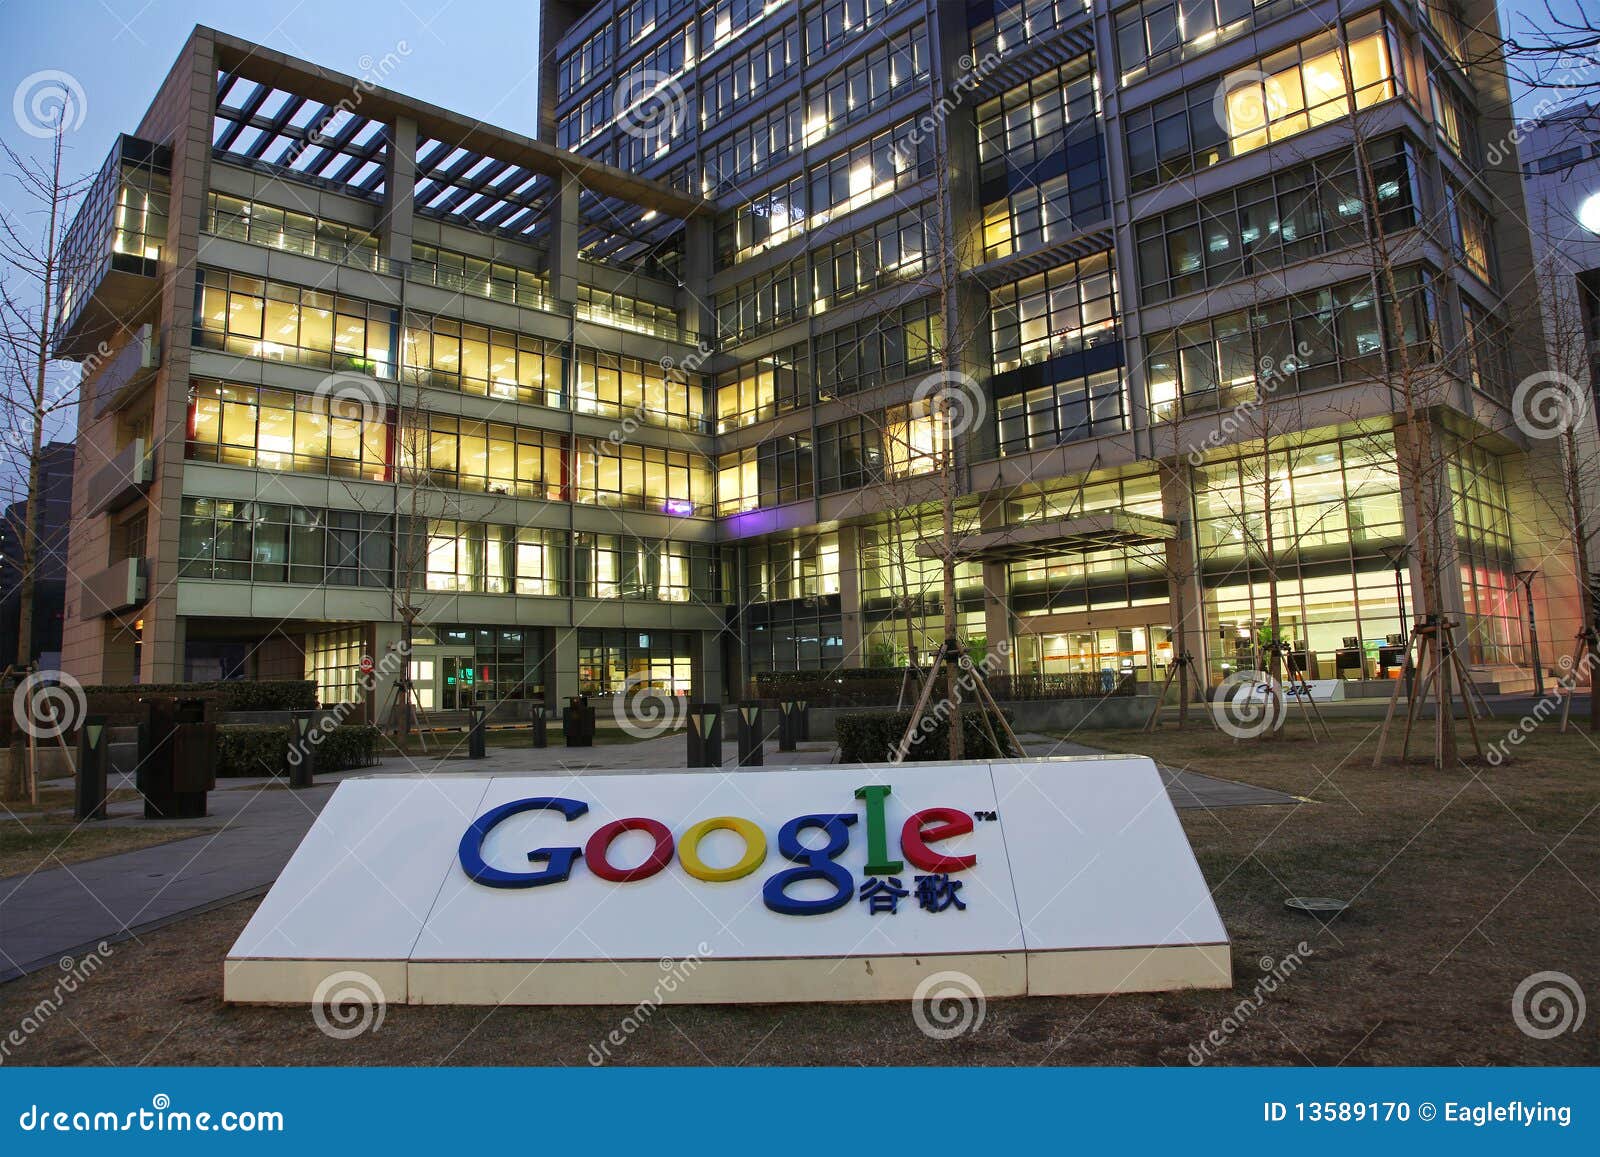 Google business plan